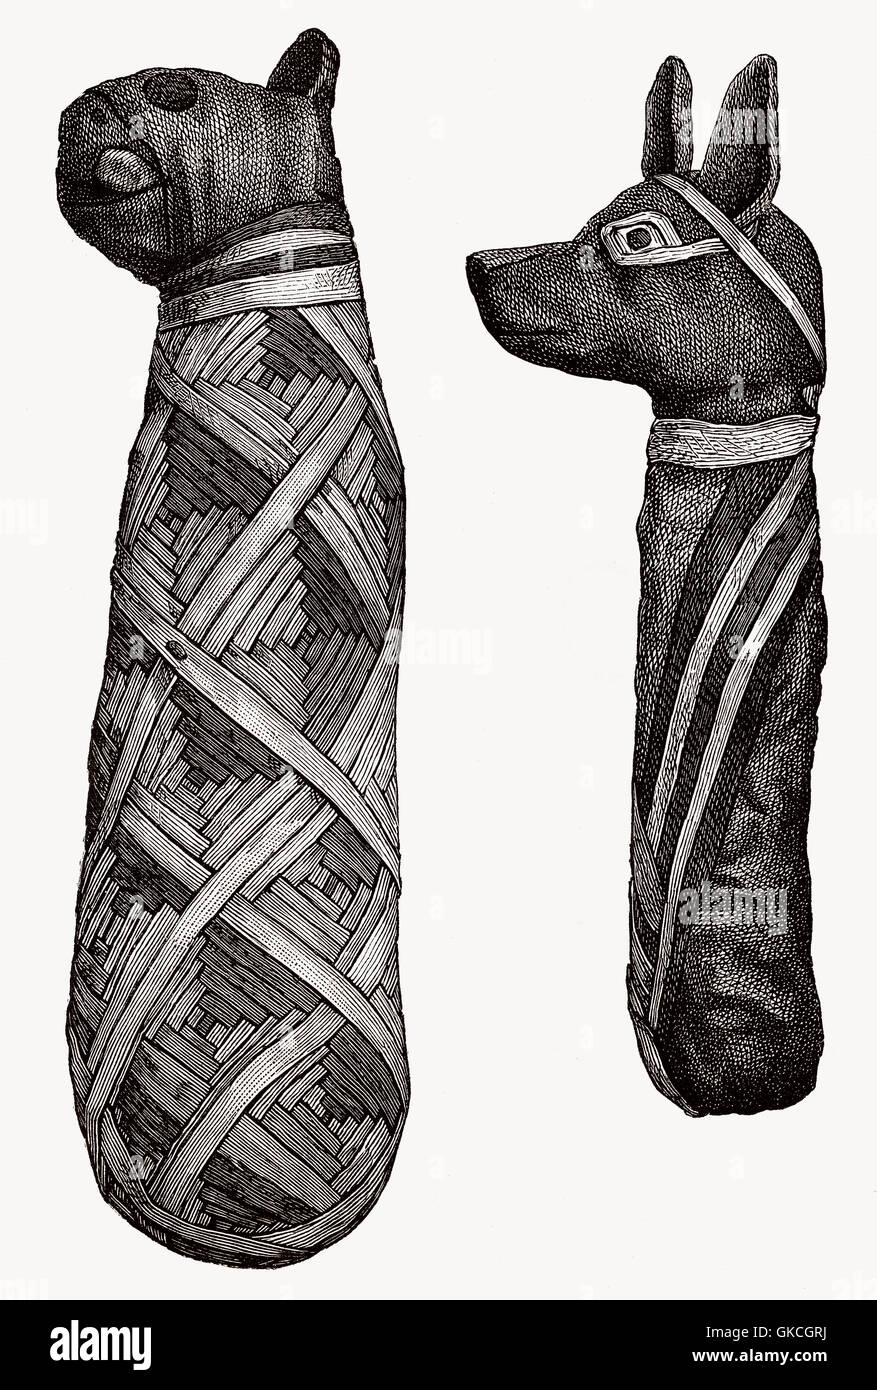 Mumien der Tiere, Altägypten, Illustration aus dem 19. Jahrhundert Stockfoto